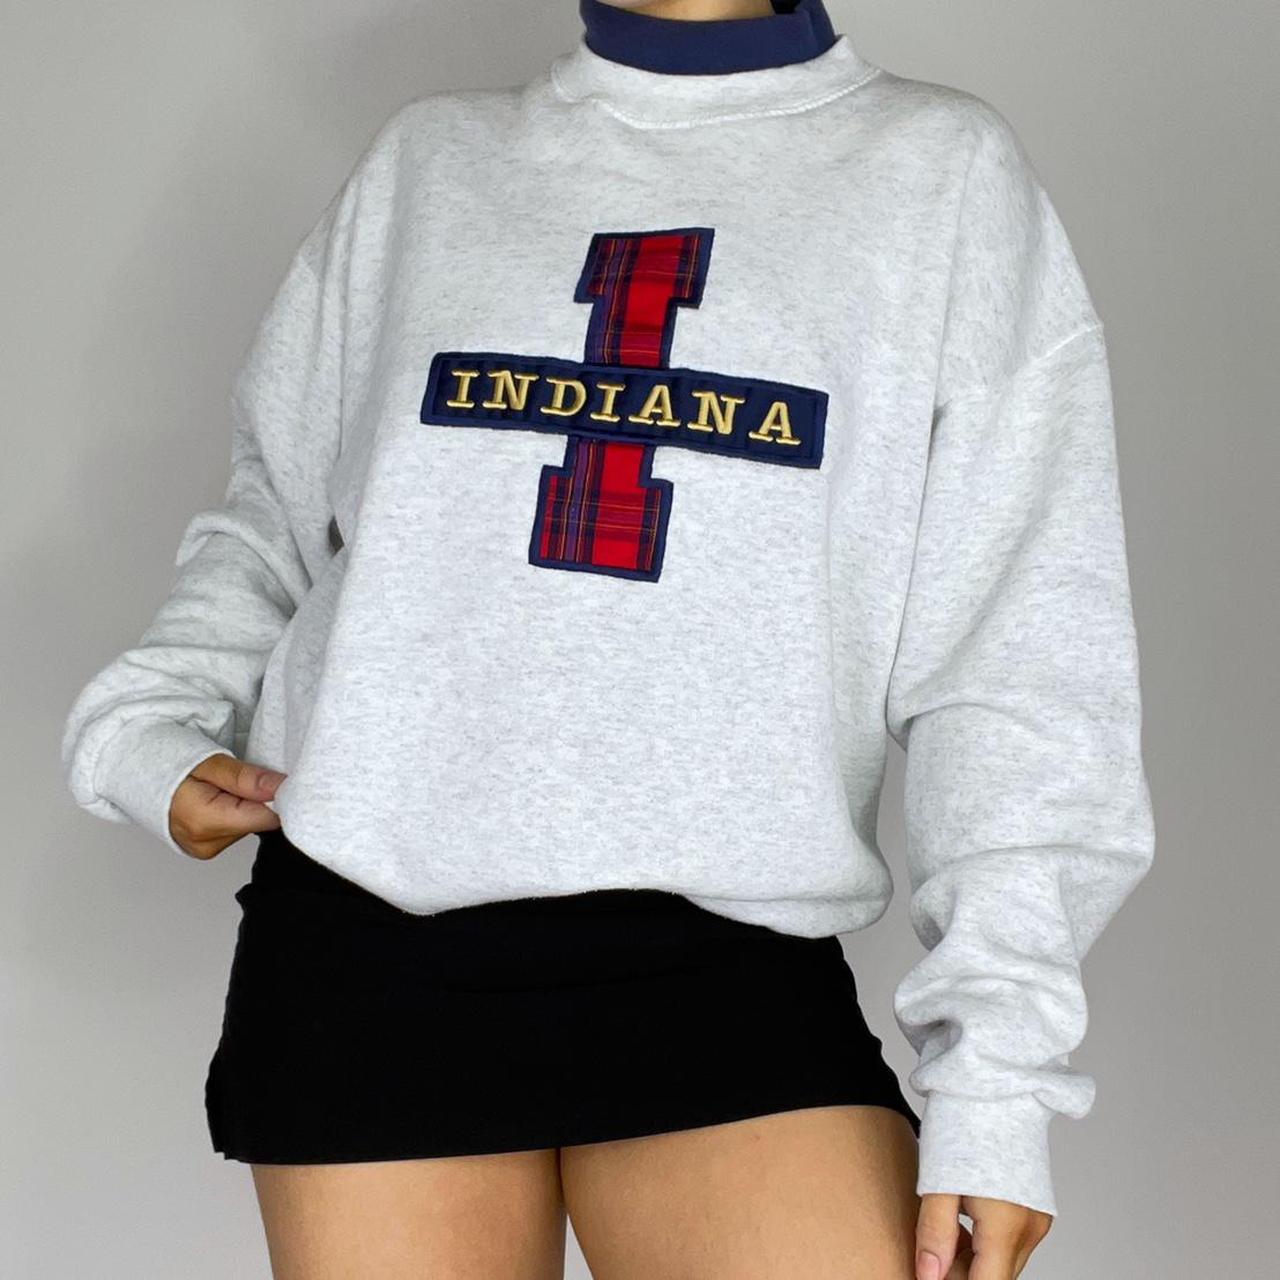 Product Image 3 - College crewneck ✨

Indiana university sweater